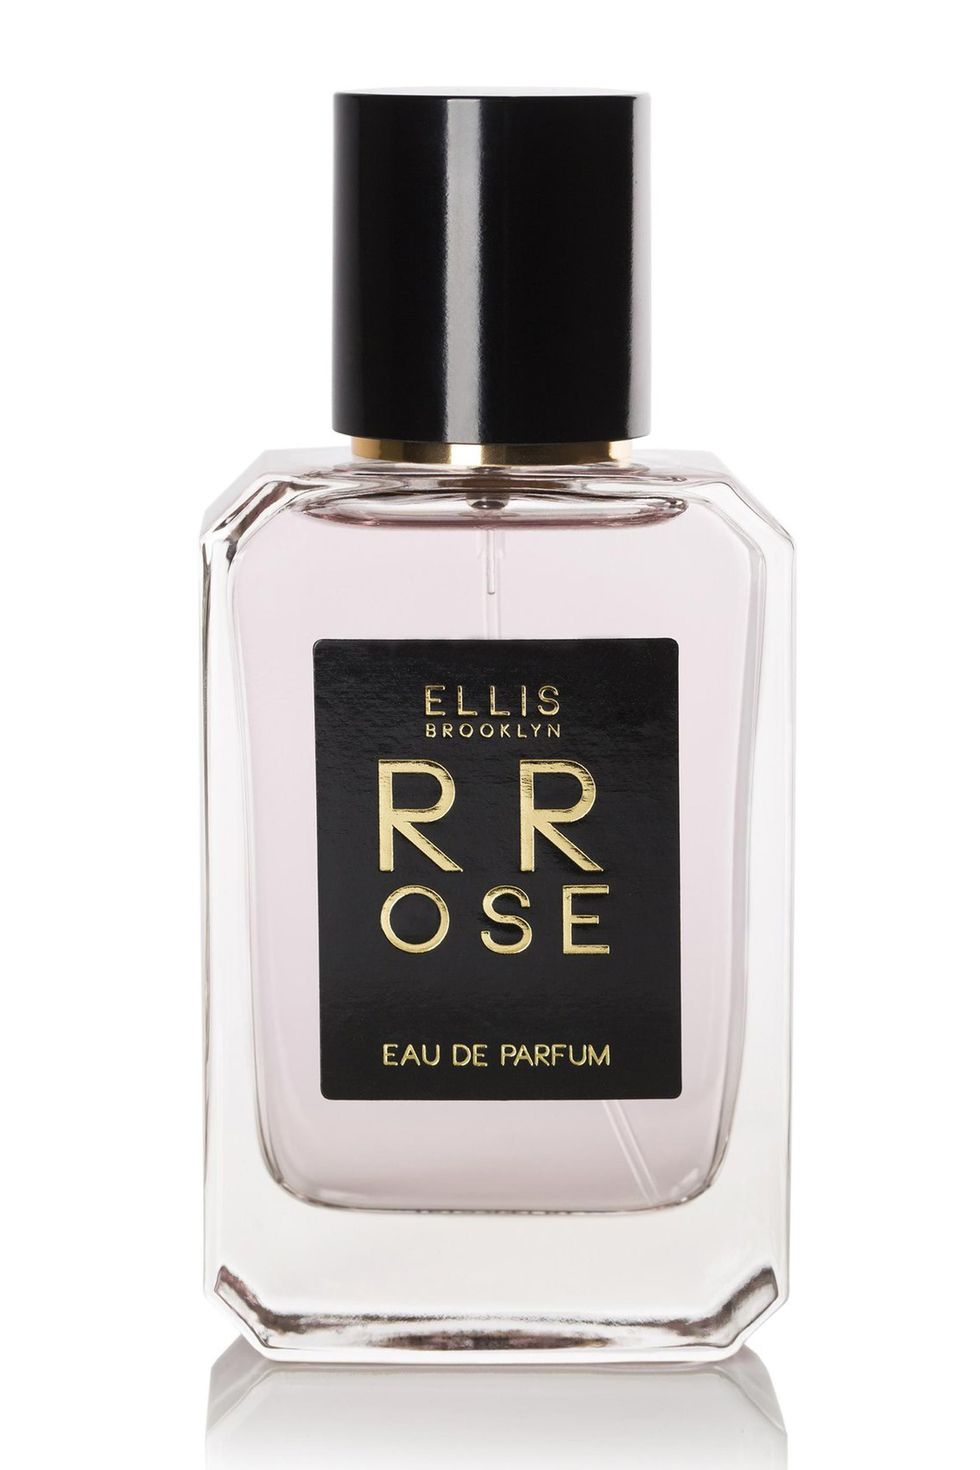 Ellis Brooklyn Rrose Eau de Parfum